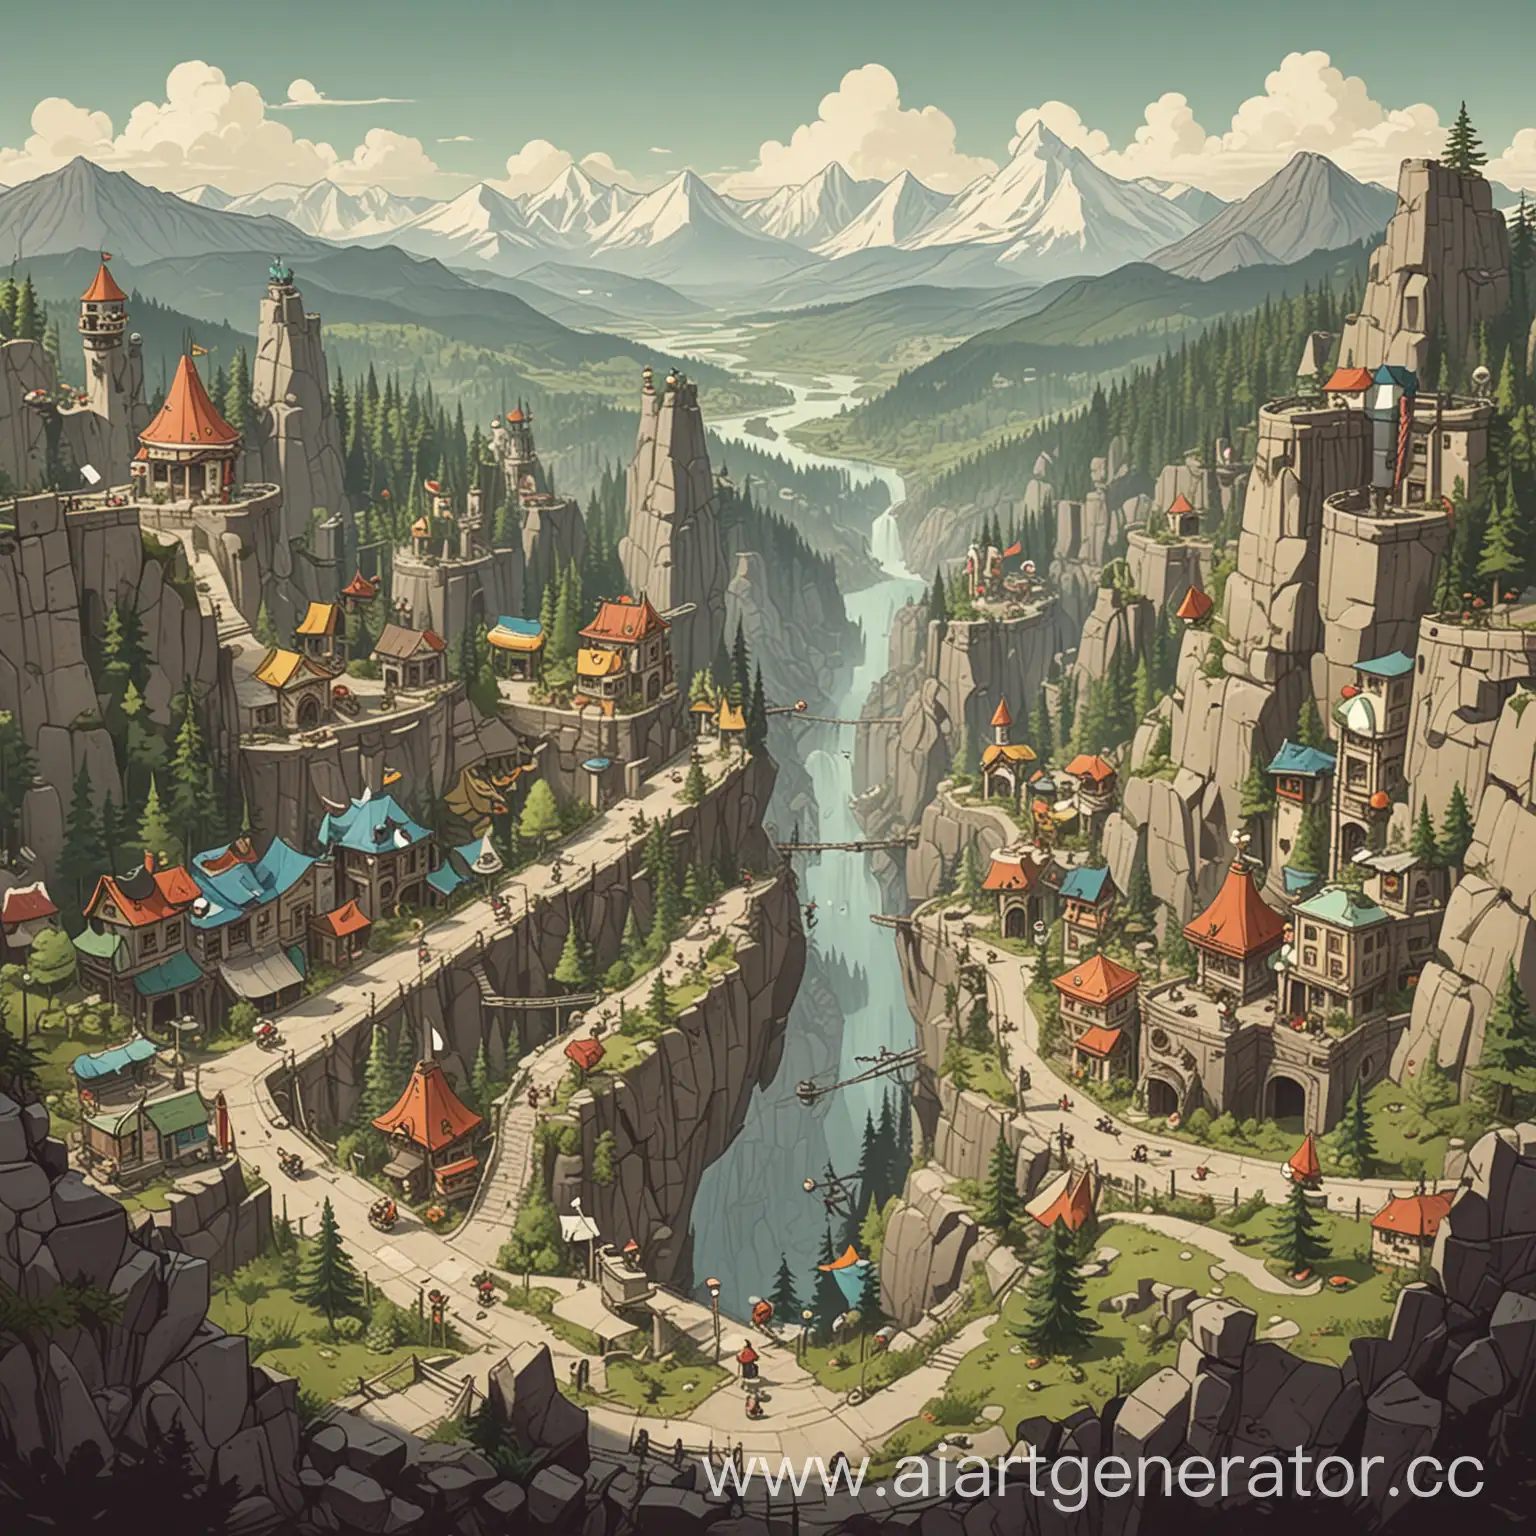 cuphead style. modern map. modern city and forest. mountains. окружен стеной, вид сверху, с высоты как игровая карта.